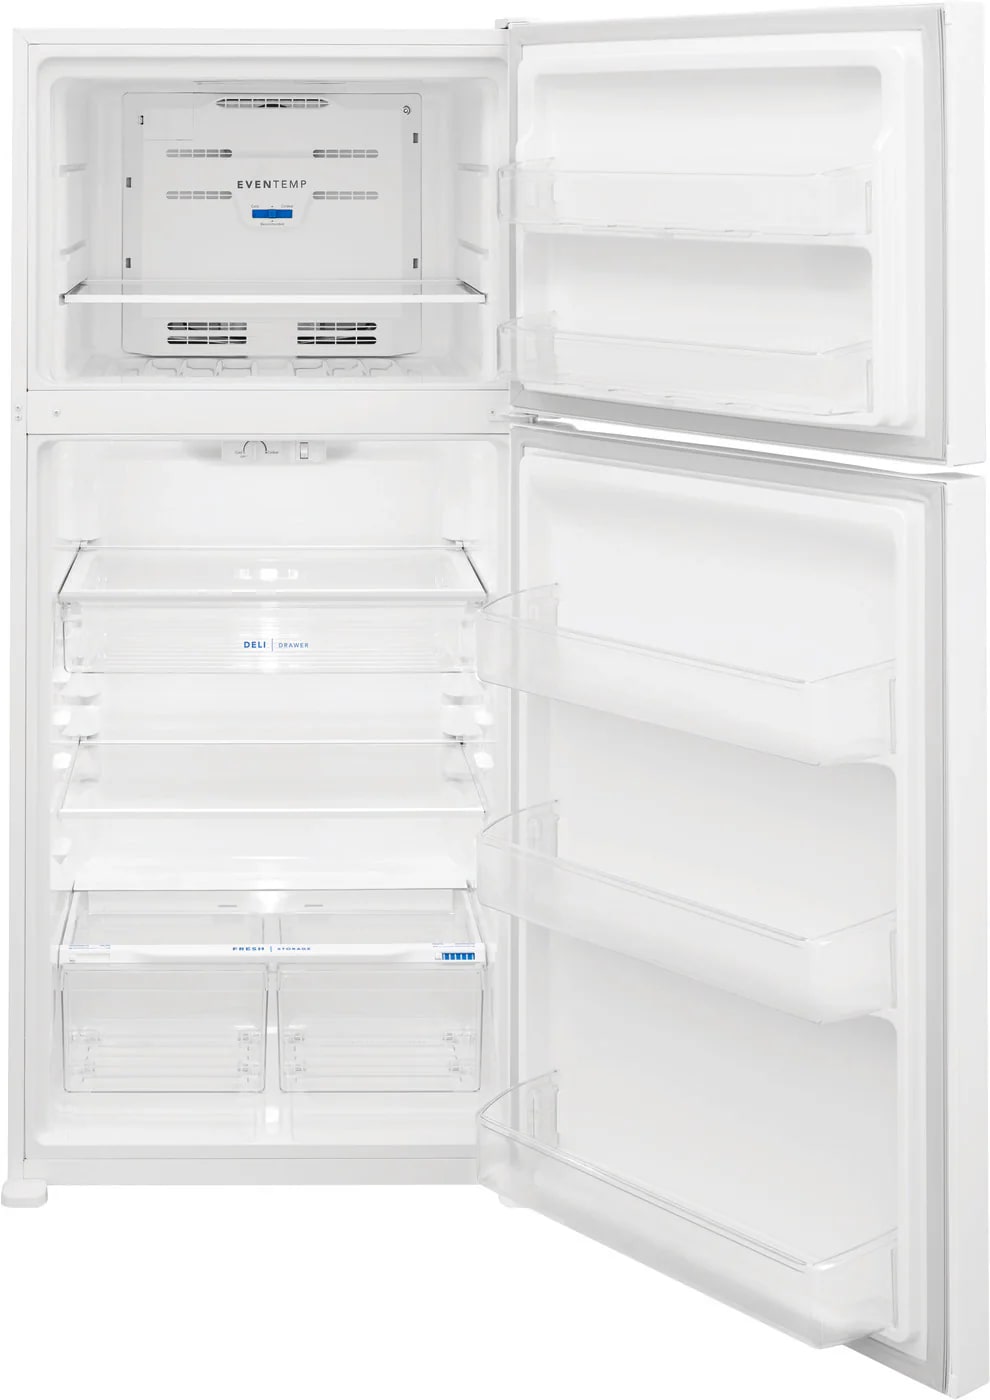 Frigidaire - 30 Inch 20 cu. ft Top Mount Refrigerator in White - FFTR2045VW